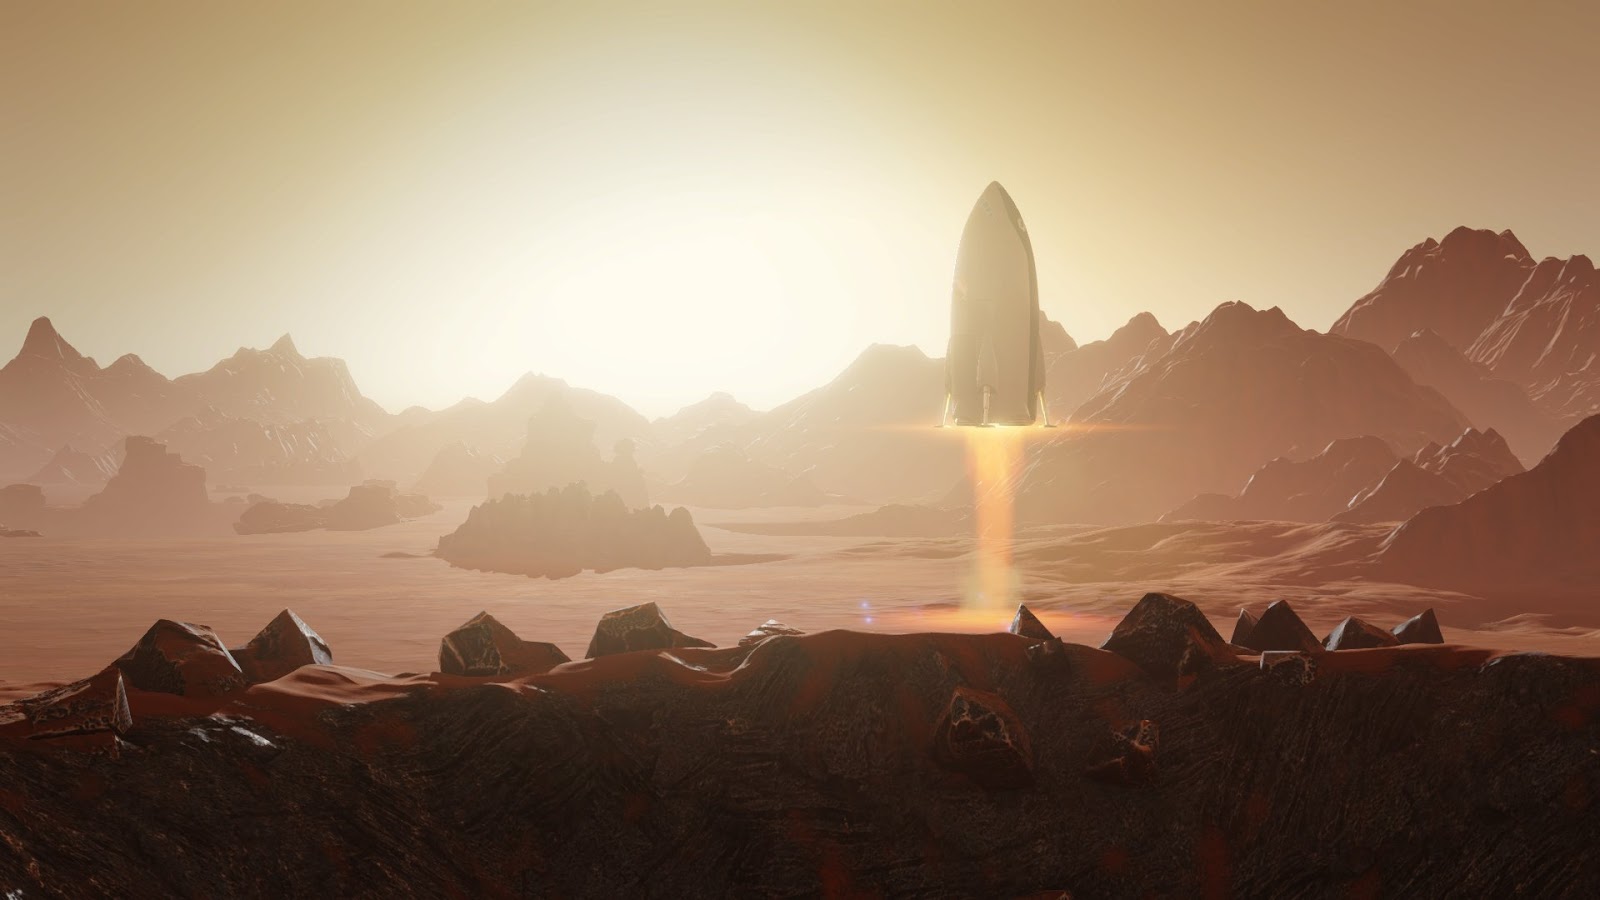 Spaceship landing on Mars from Surviving Mars game